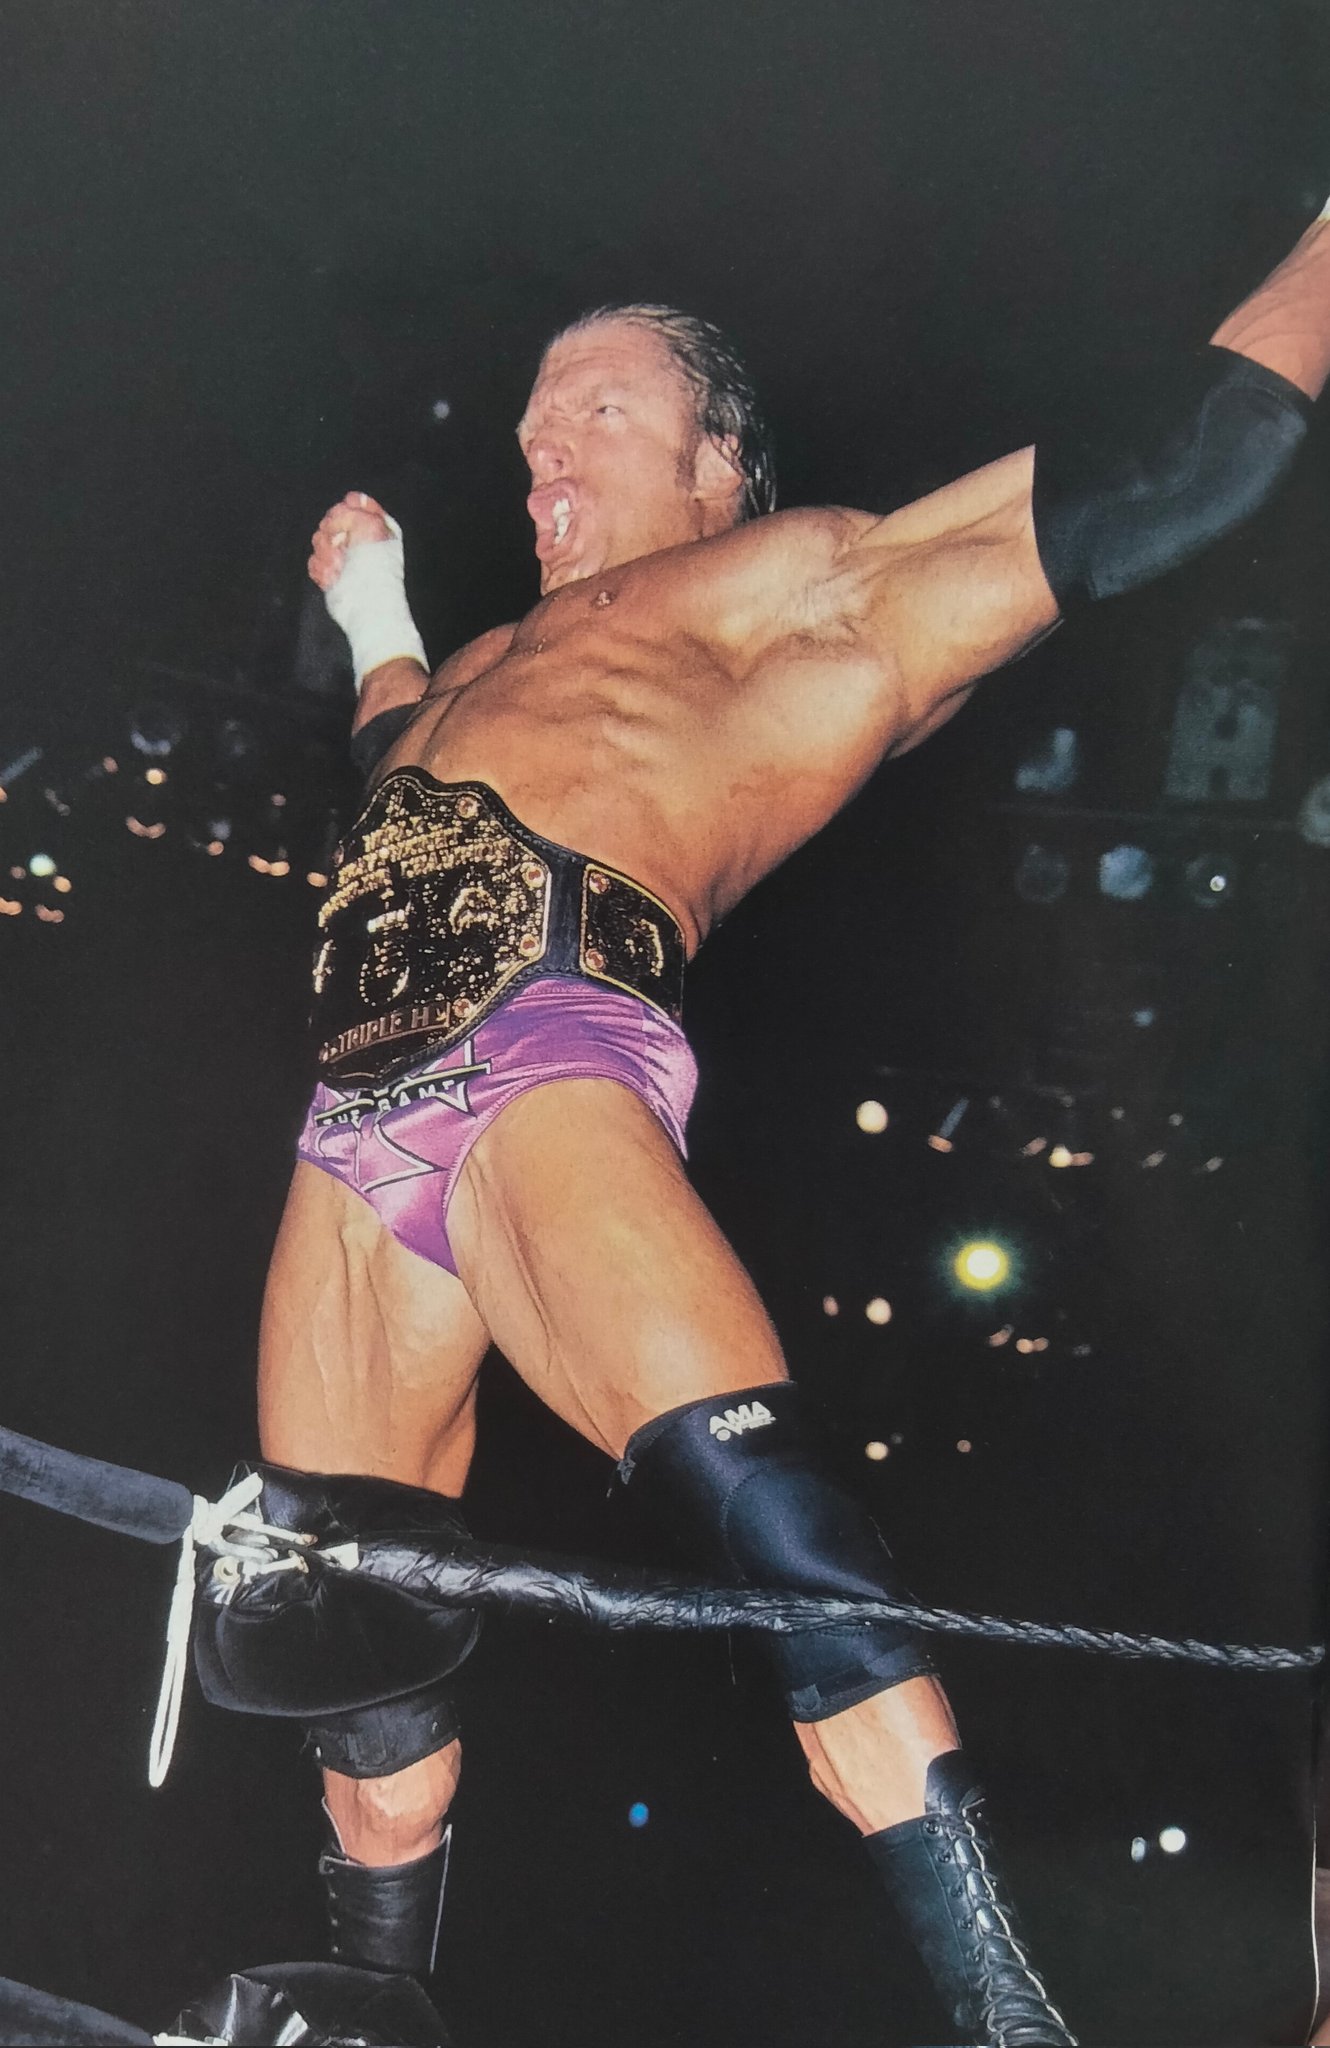 Rasslin' History 101 on X: "World Heavyweight Champion Triple H,before his  Title defense vs Booker T at WrestleMania XIX. https://t.co/4Tk9Nf9OQk" / X